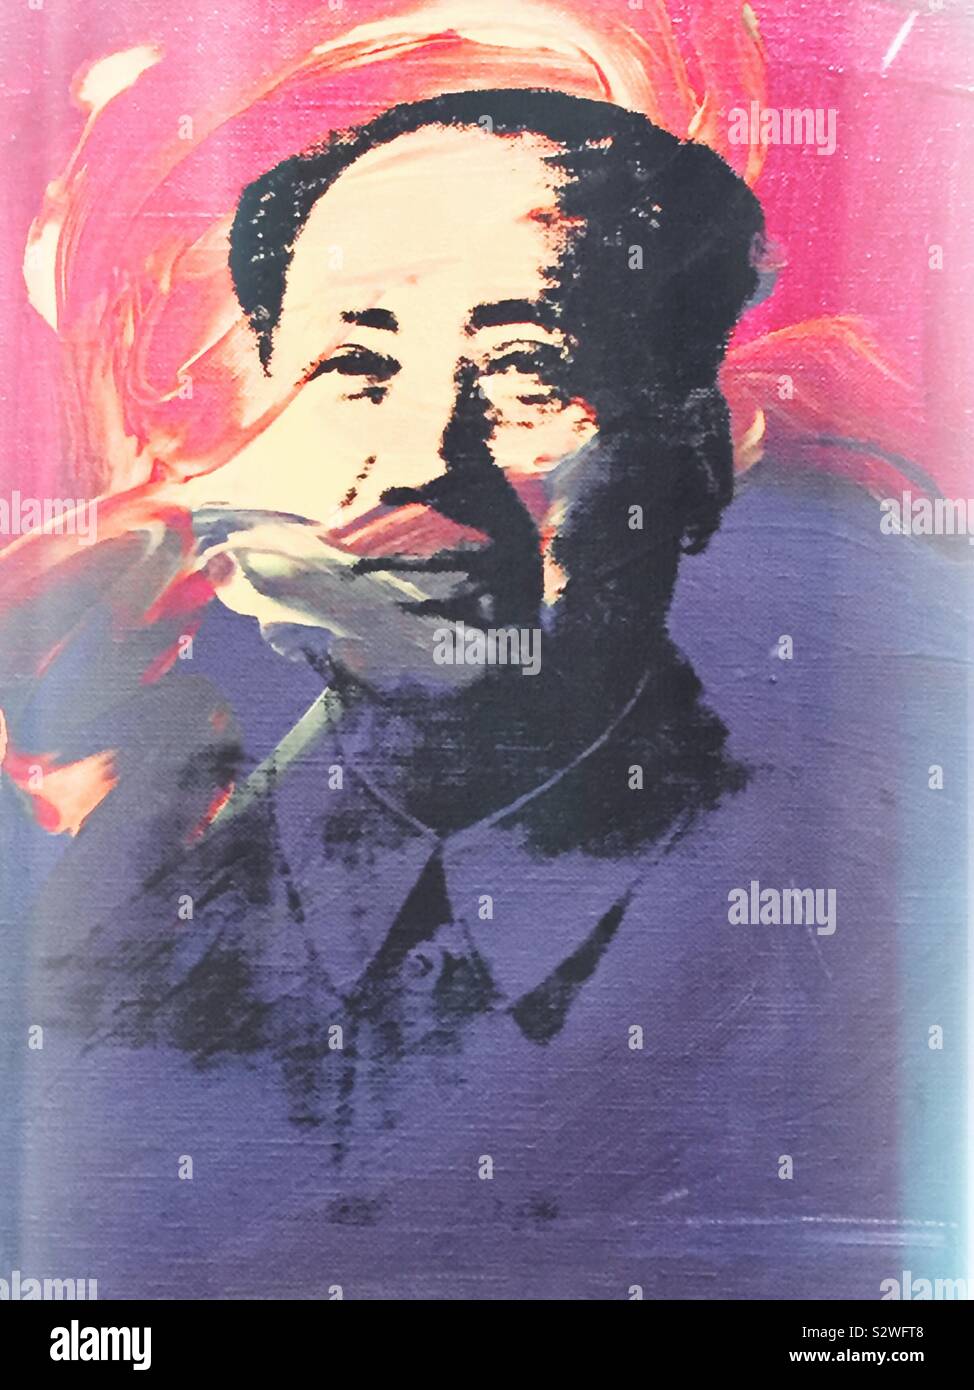 Andy Warhol portrait of  Mao Tse Tung Stock Photo